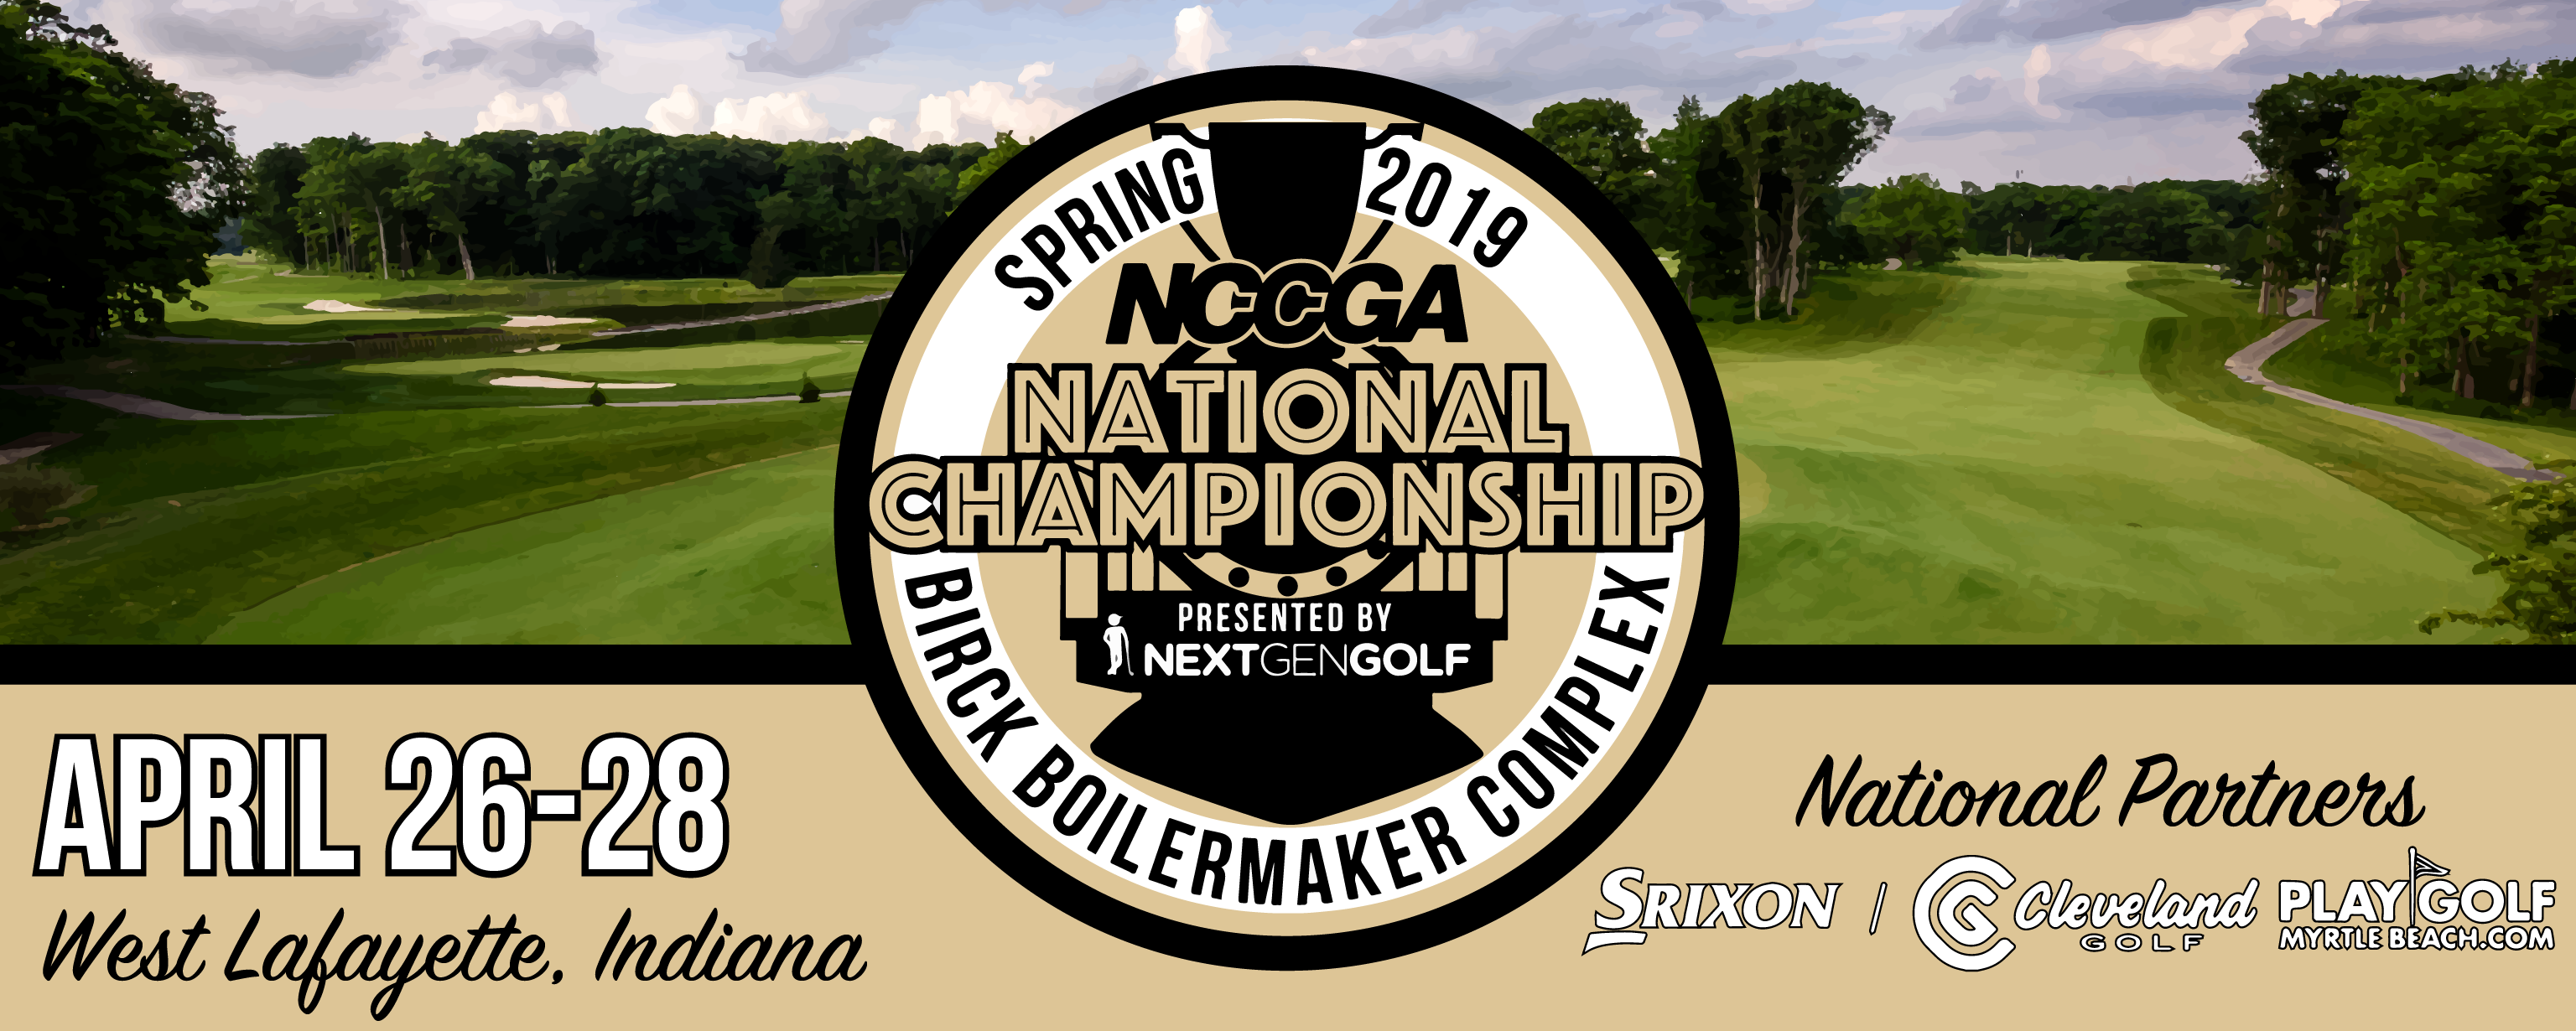 Spring 2019 NCCGA National Championship